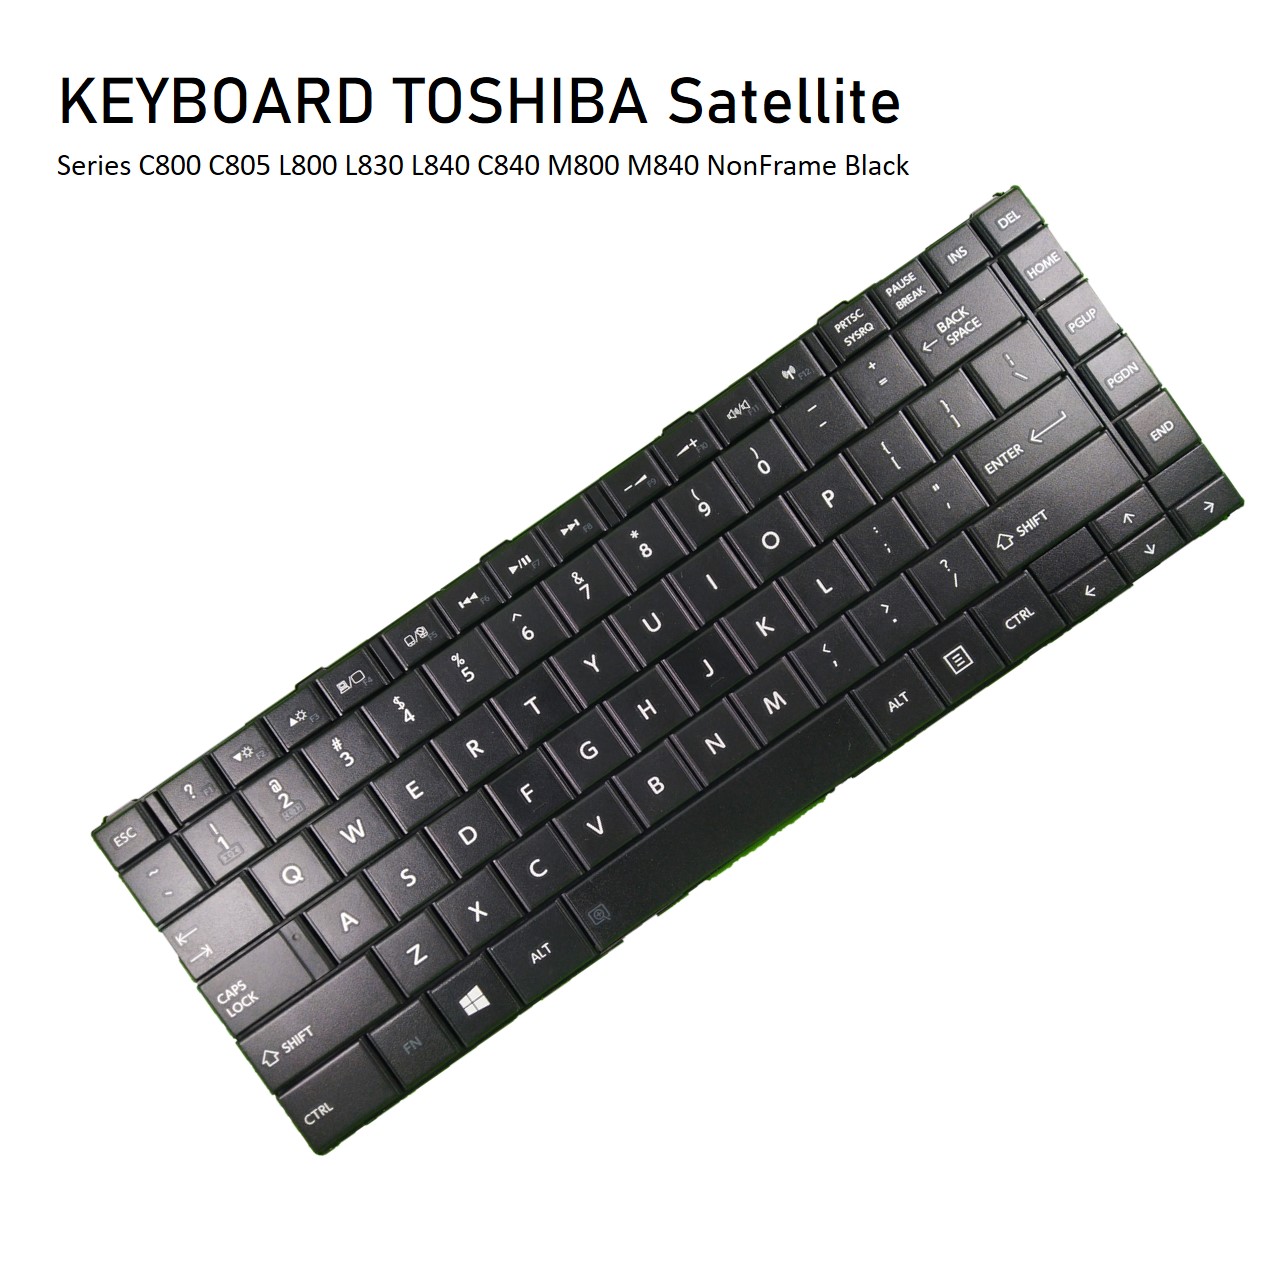 Gazechimp RU with Black Frame Keyobard for Toshiba L840 C800 C840 M800 M840 Laptop